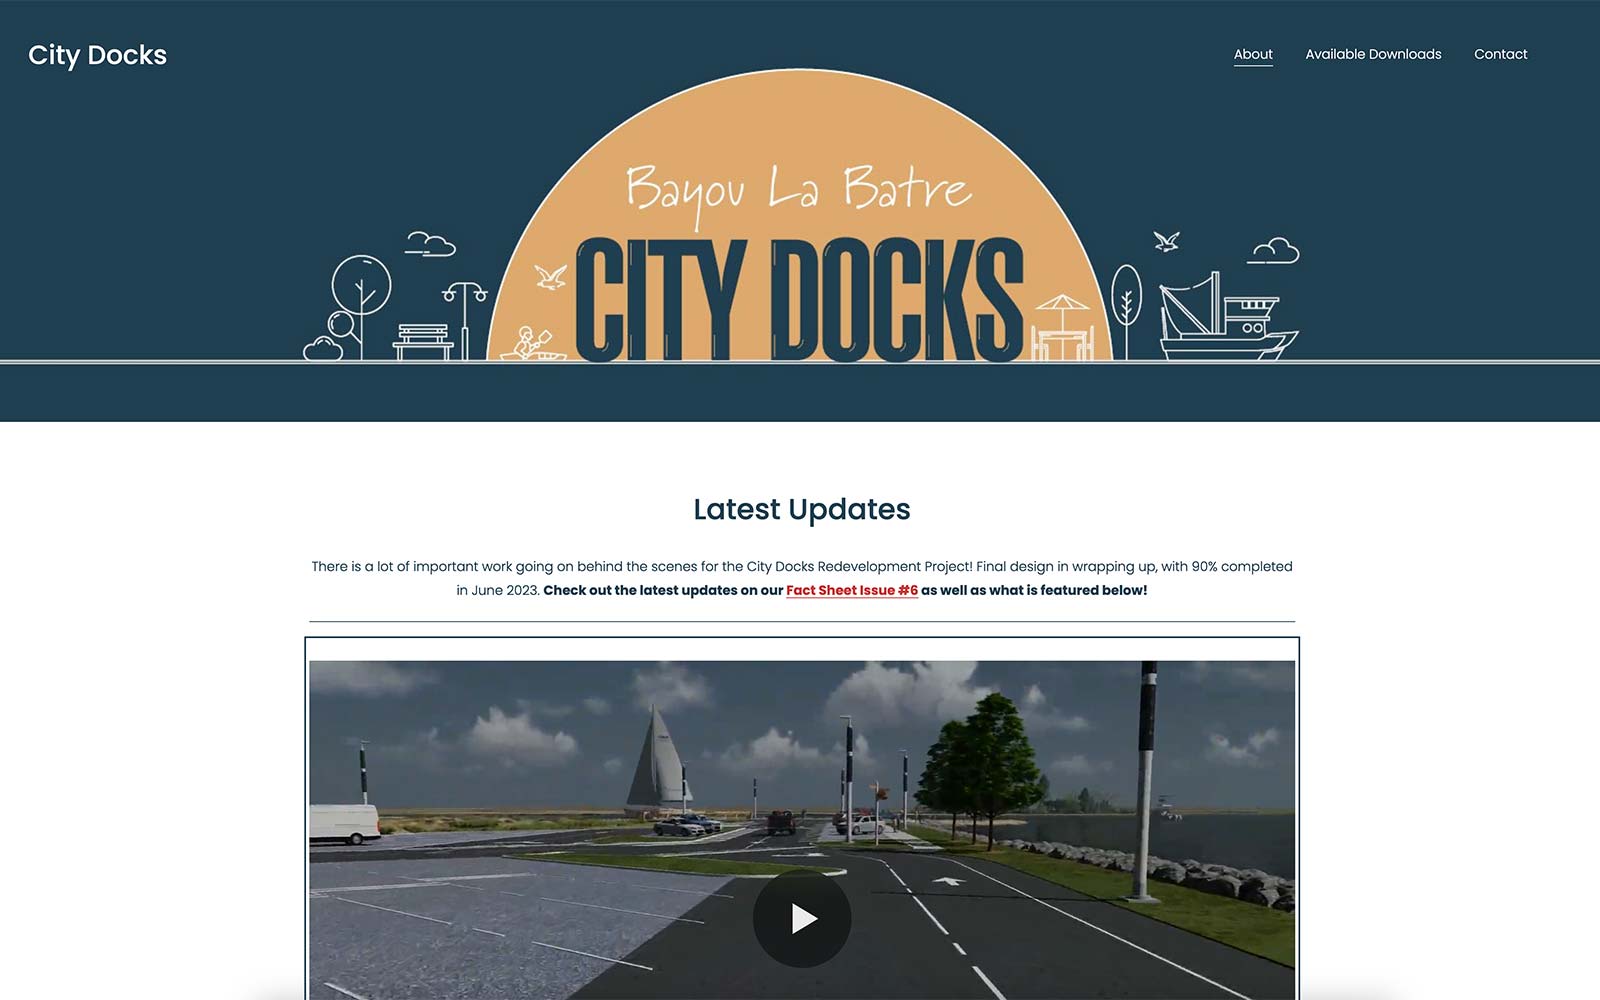 Bayou La Batre City Docks Updates Website